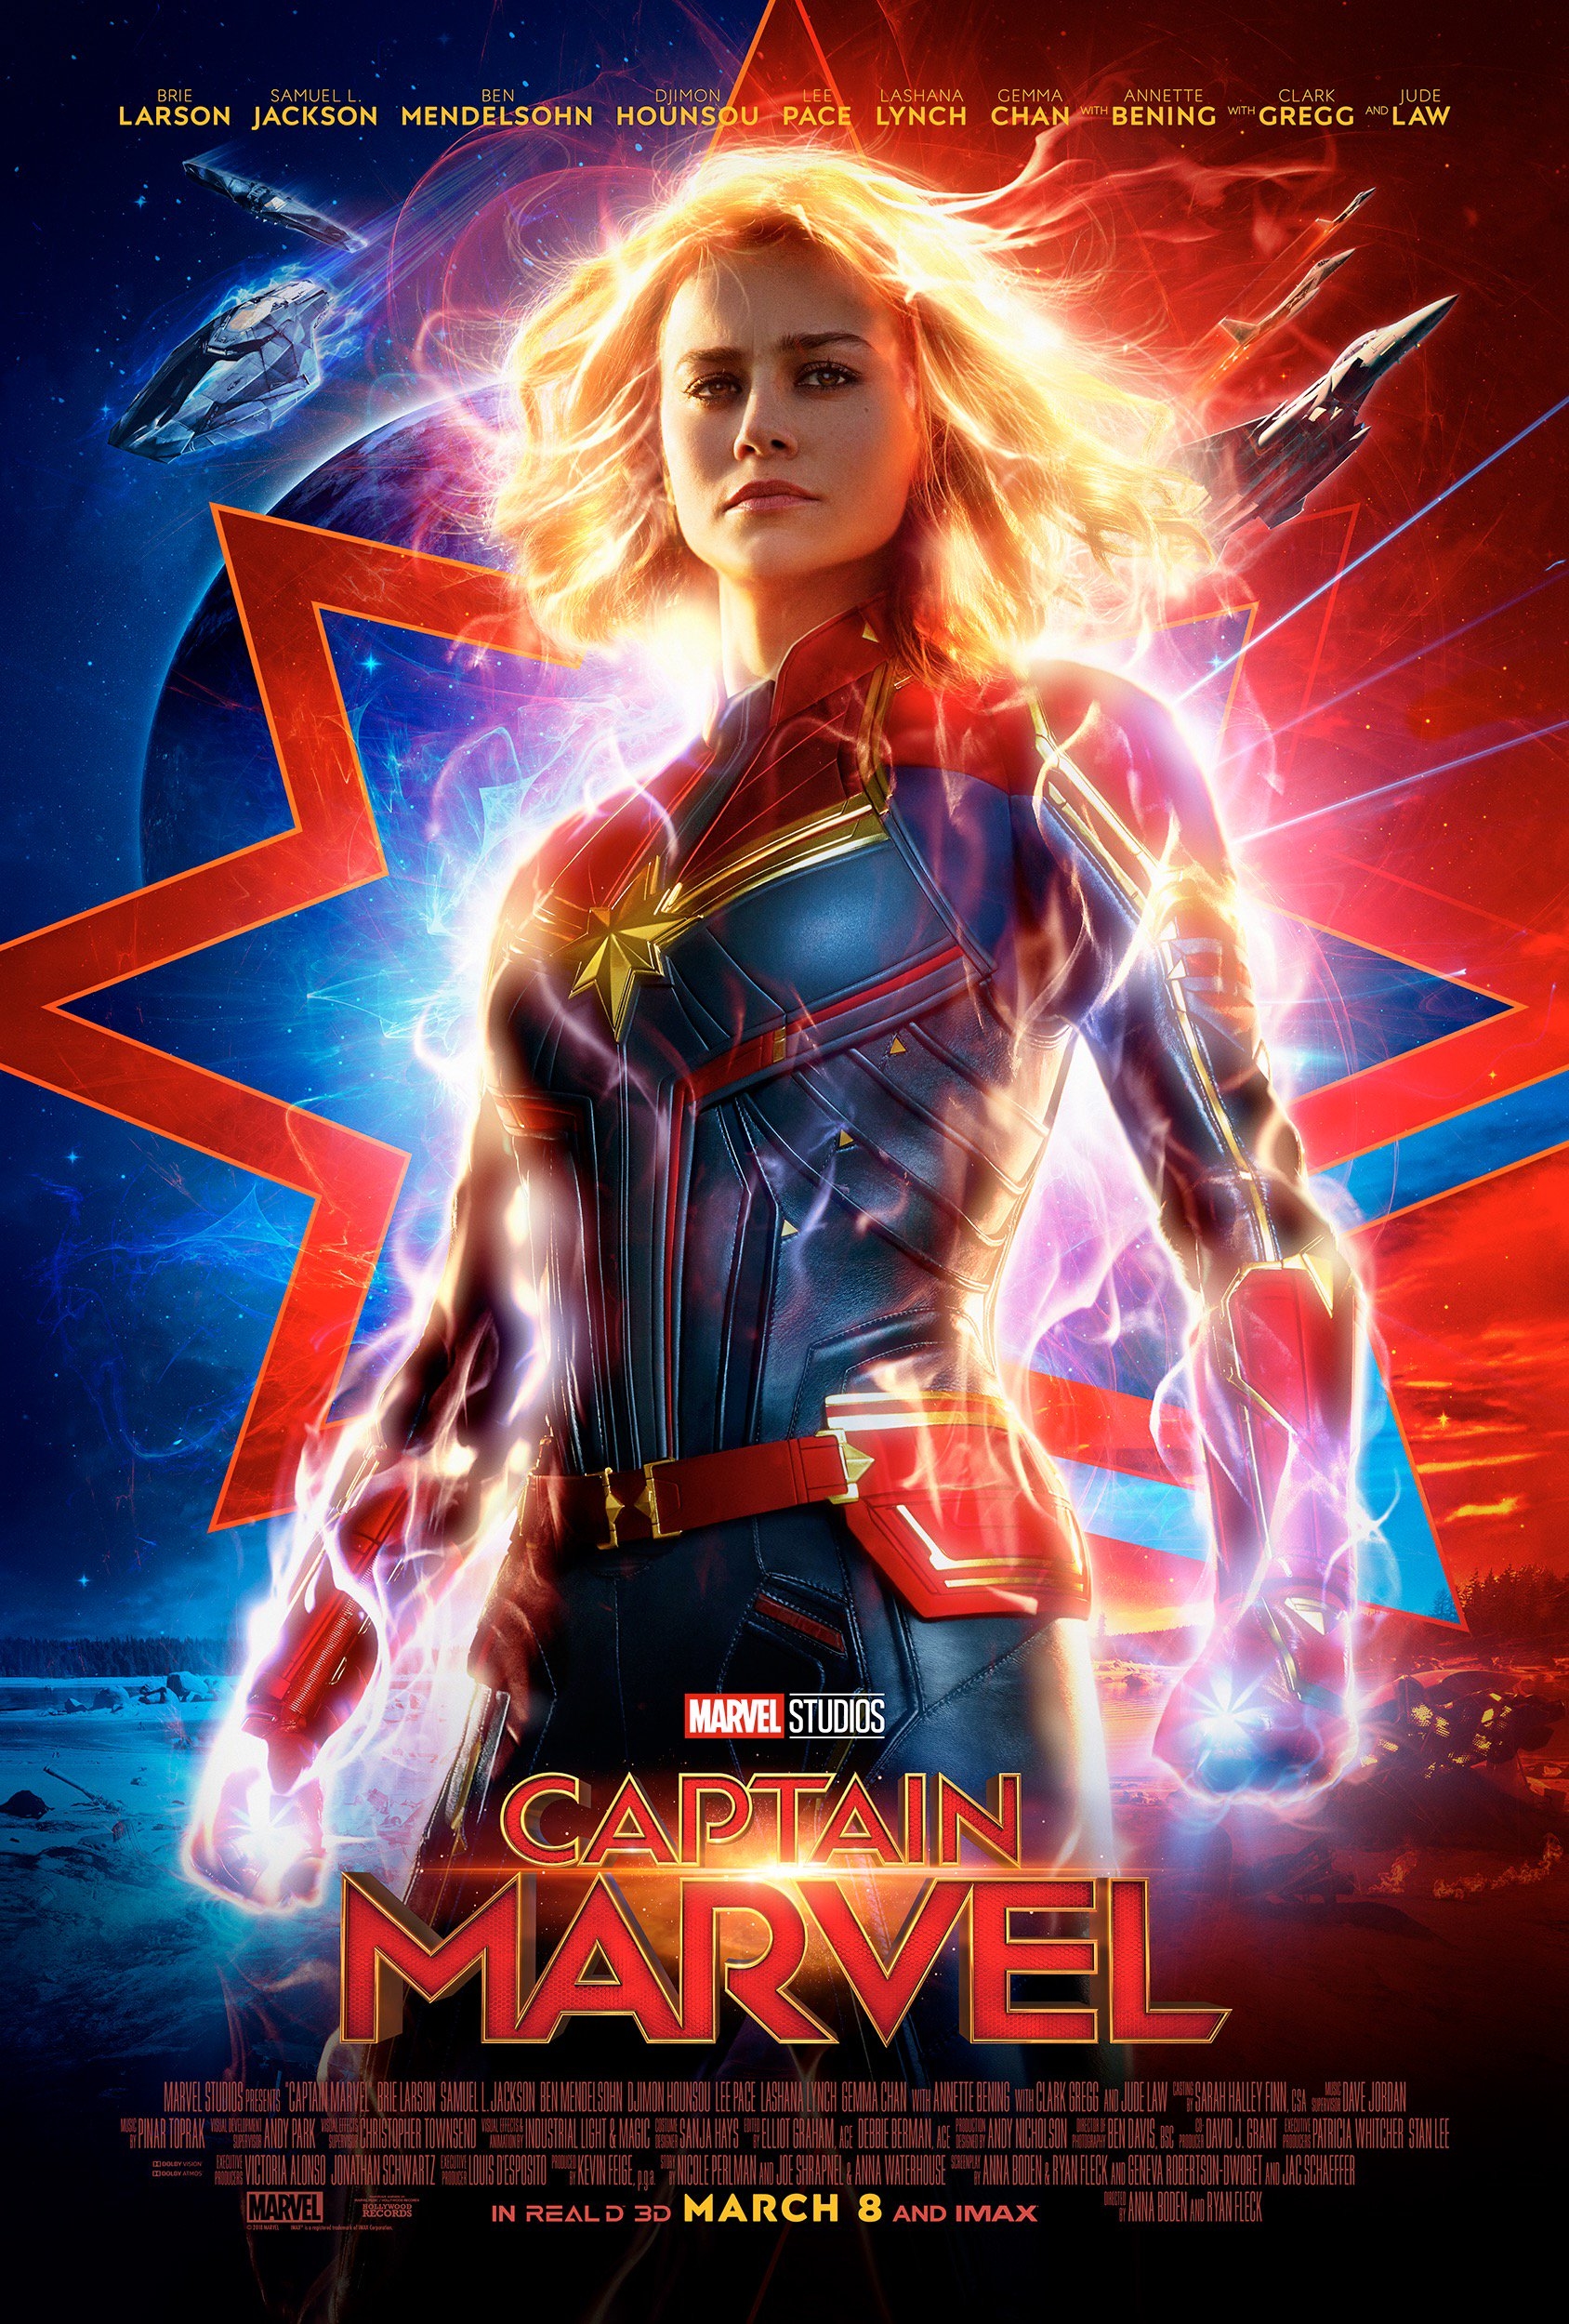 Stiahni si Filmy CZ/SK dabing Captain Marvel (2019)(CZ/EN)[1080p][HEVC] = CSFD 71%